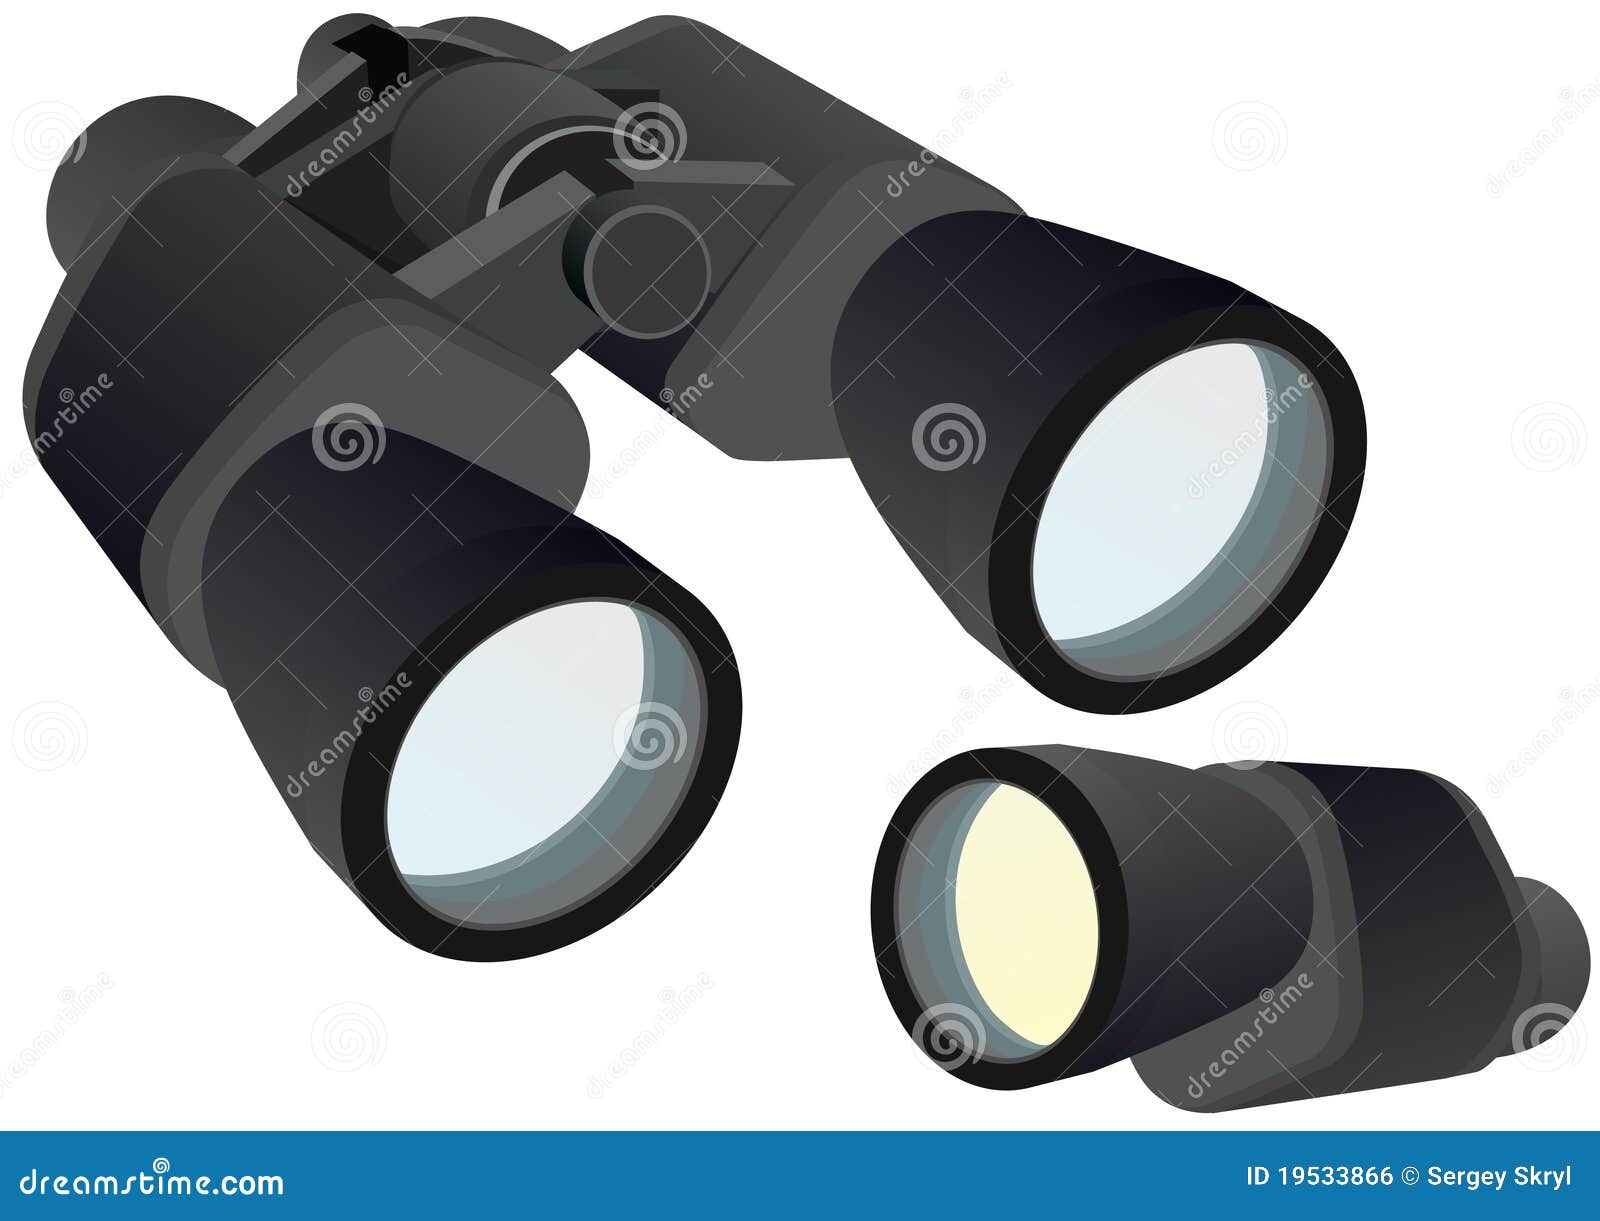 monocular vs binocular